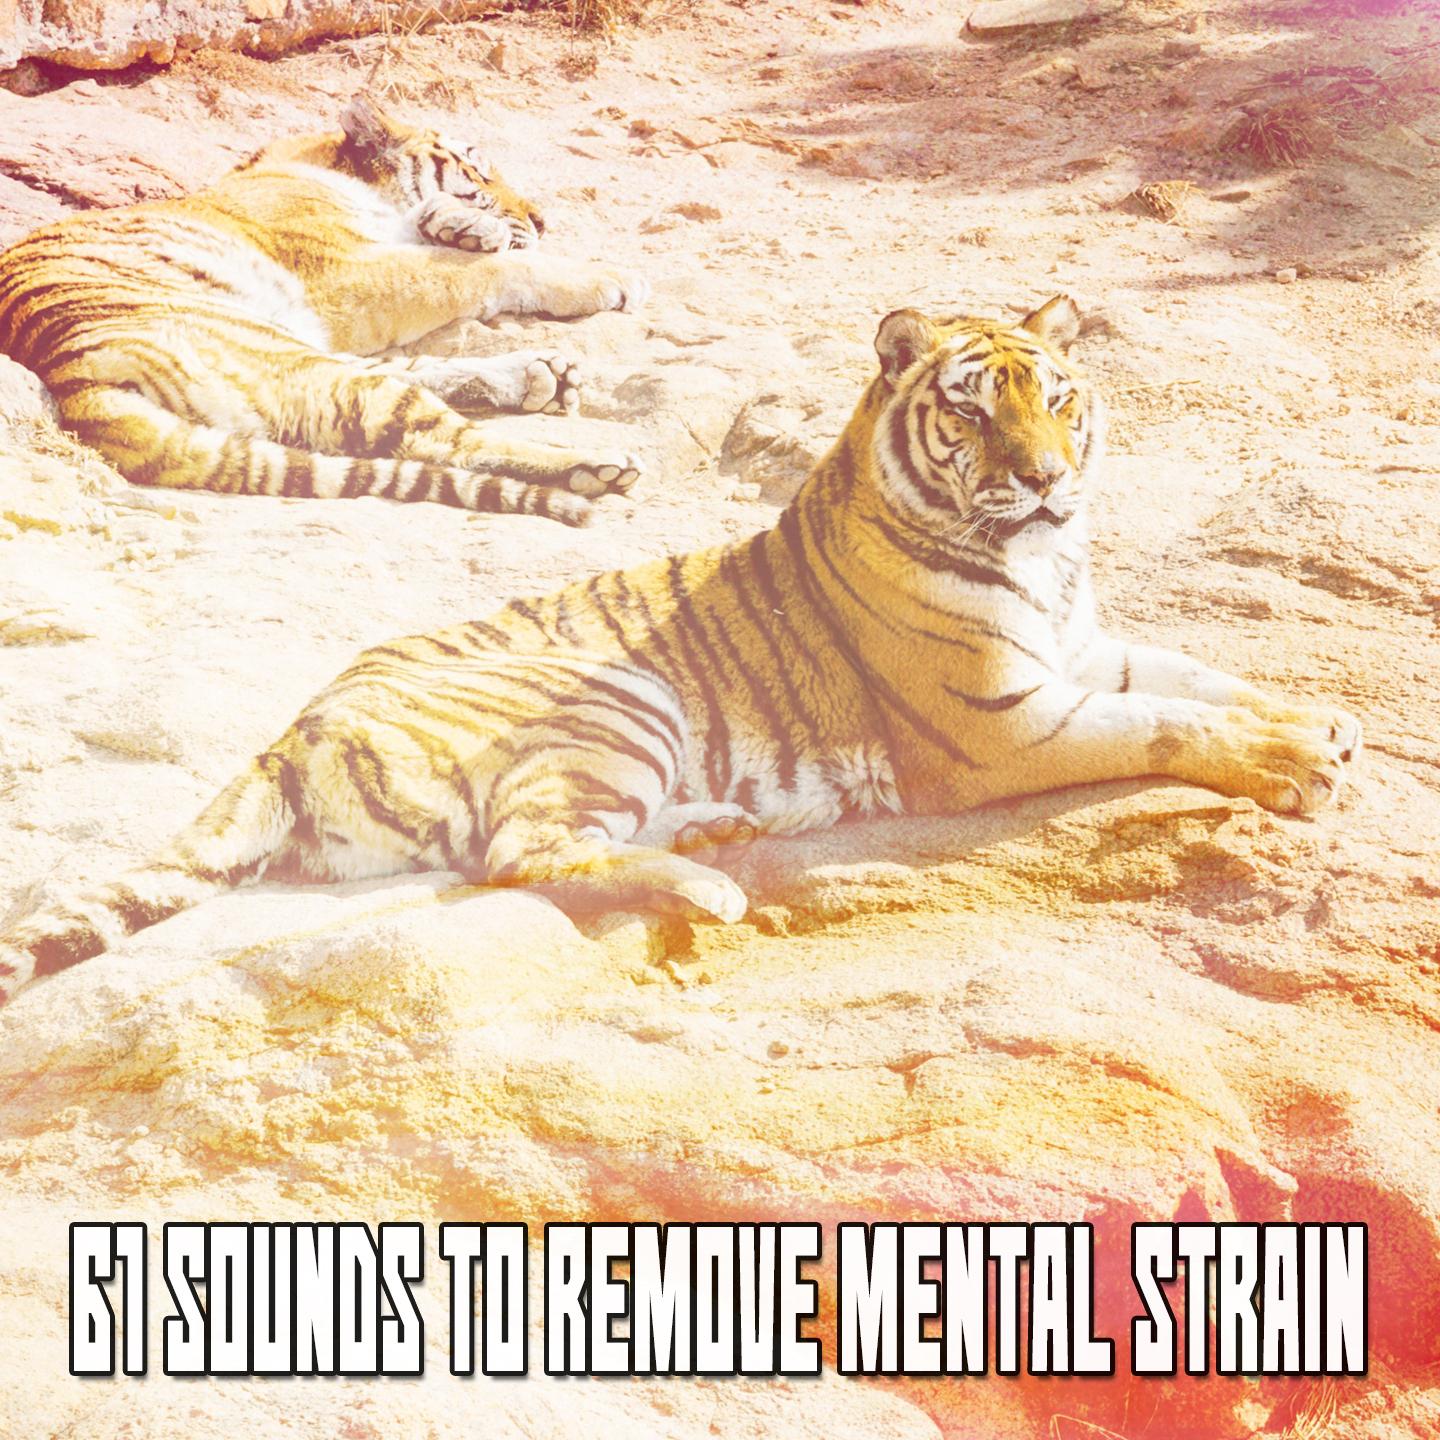 61 Sounds To Remove Mental Strain